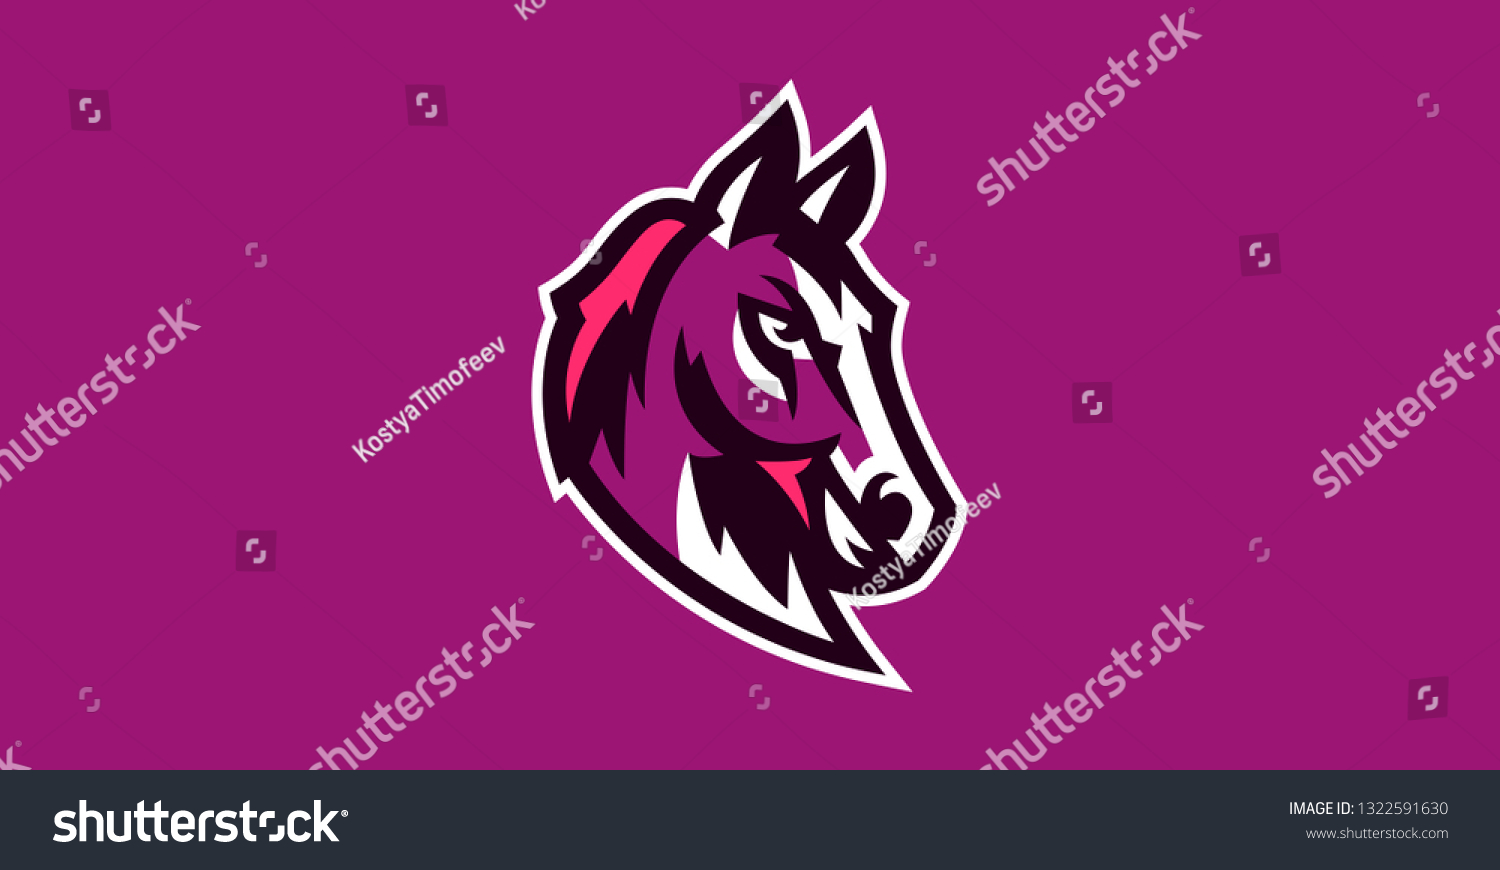 Horse logo. Sports logos of horses, racing stallions. Shield, text, mascot, head of a stallion. Vector illustration #1322591630